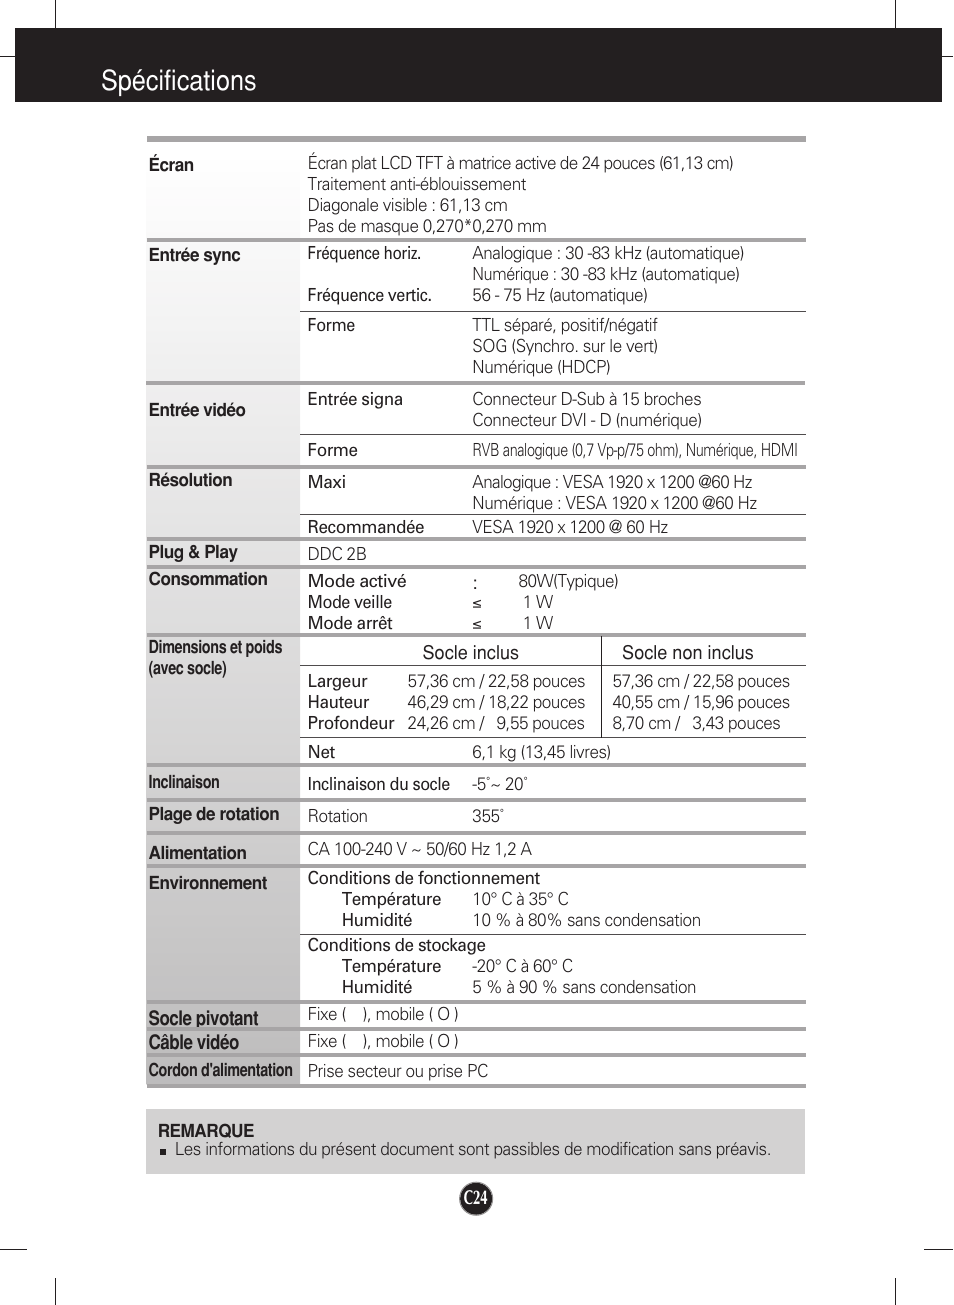 Spécifications | LG W2452V-PF Manuel d'utilisation | Page 25 / 27